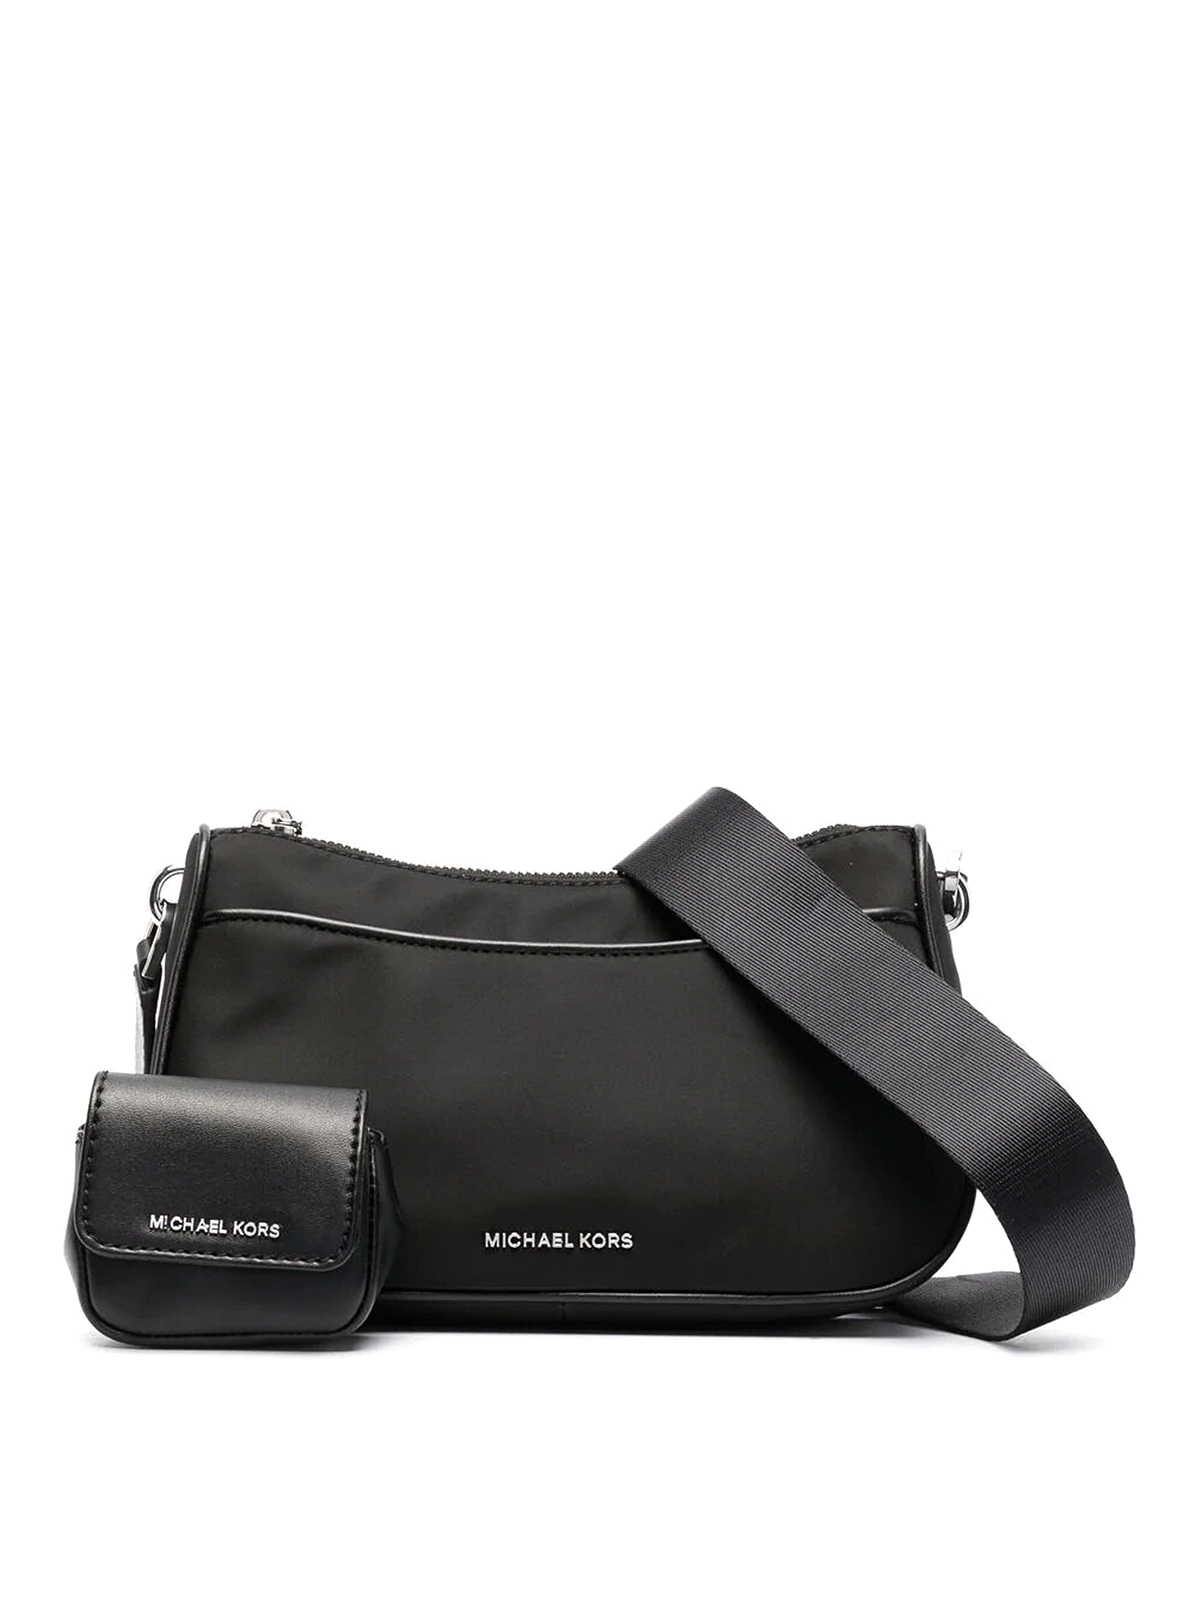 Shoulder bags Michael Kors - Jet set nylon bag with zip and strap -  32R3SJ6C8C001